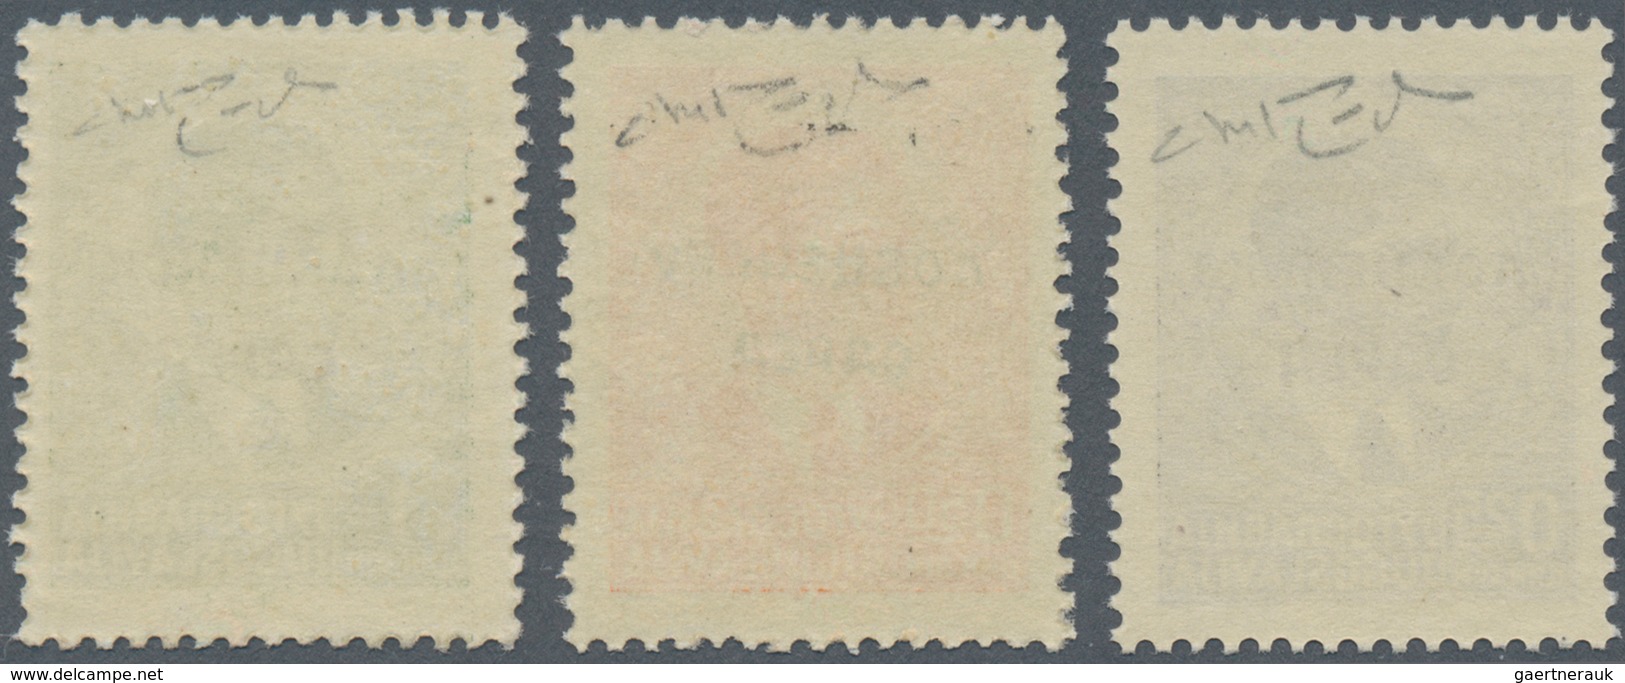 Italienische Besetzung 1941/43 - Montenegro: 1941, Yugoslavia No. 393/95 With Hand Stamp Overprint F - Montenegro